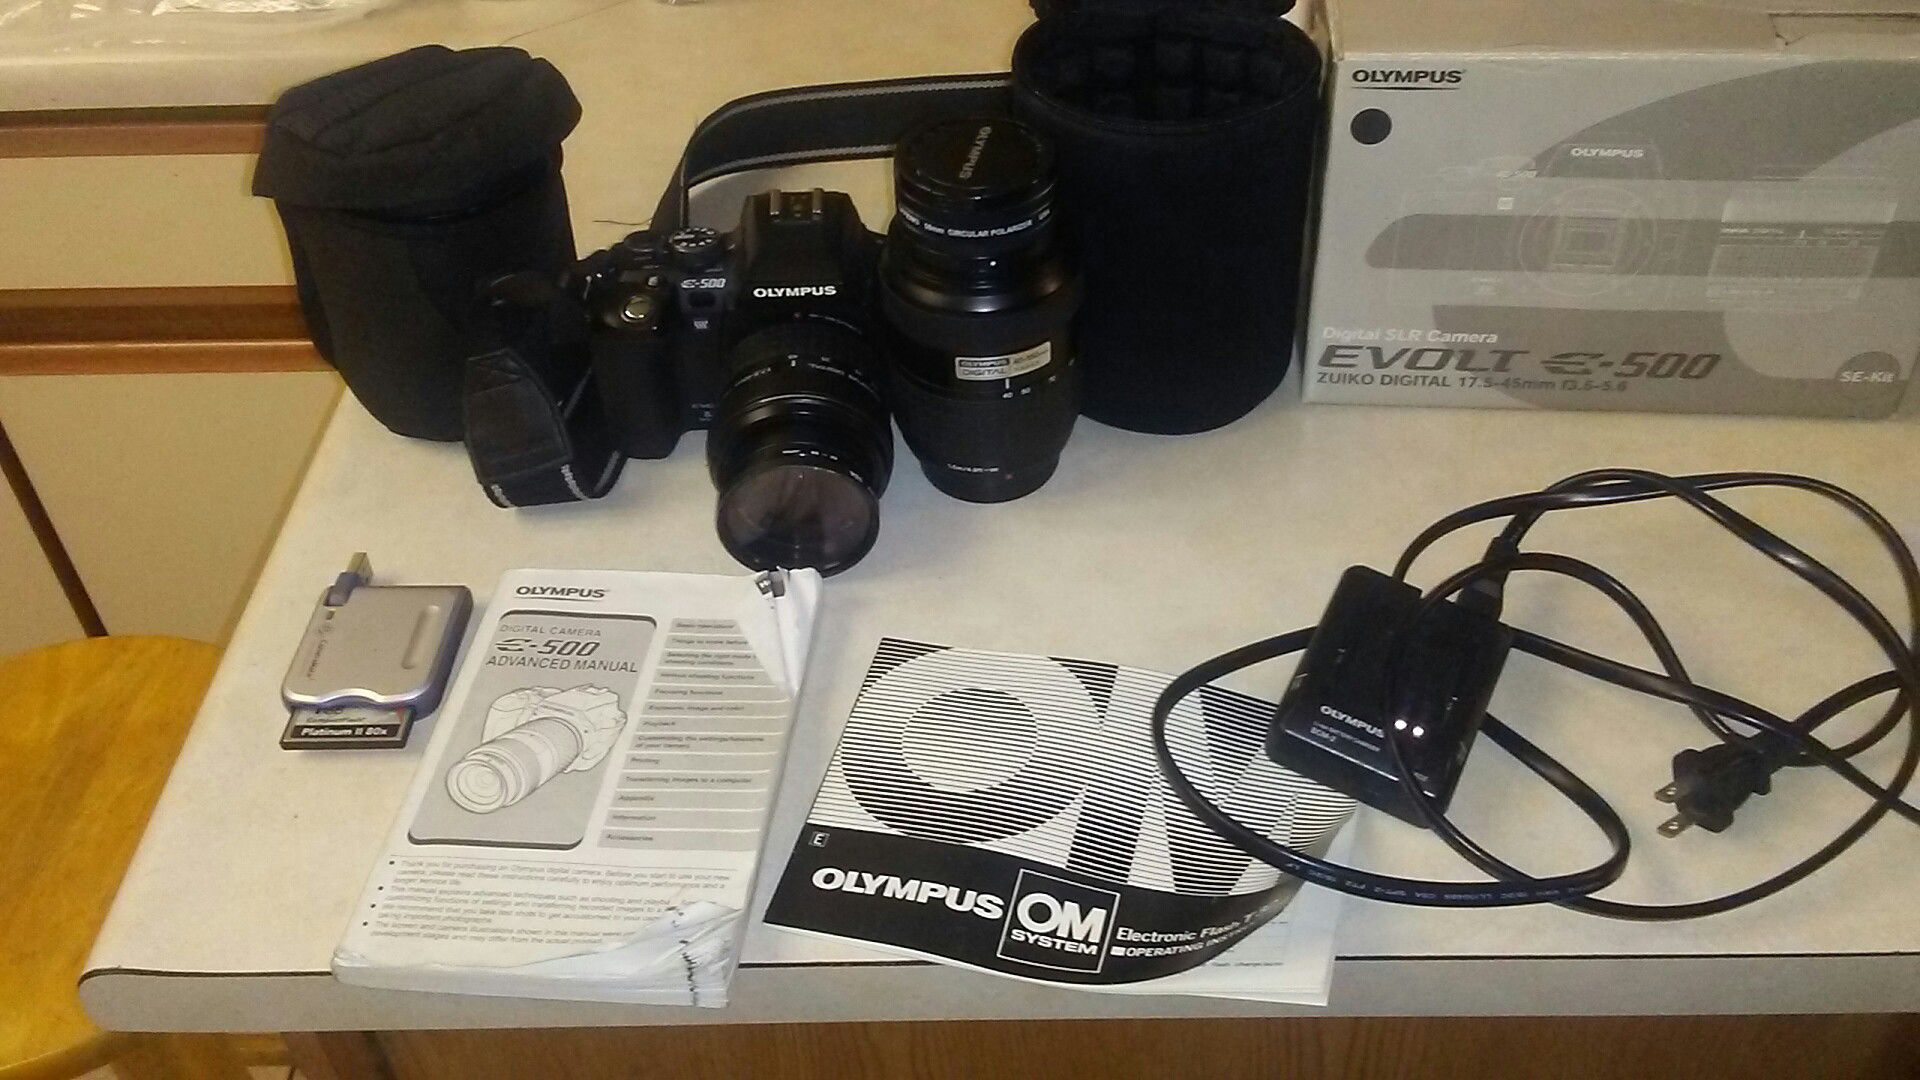 Olympus evolt e-500 digital camera with lense